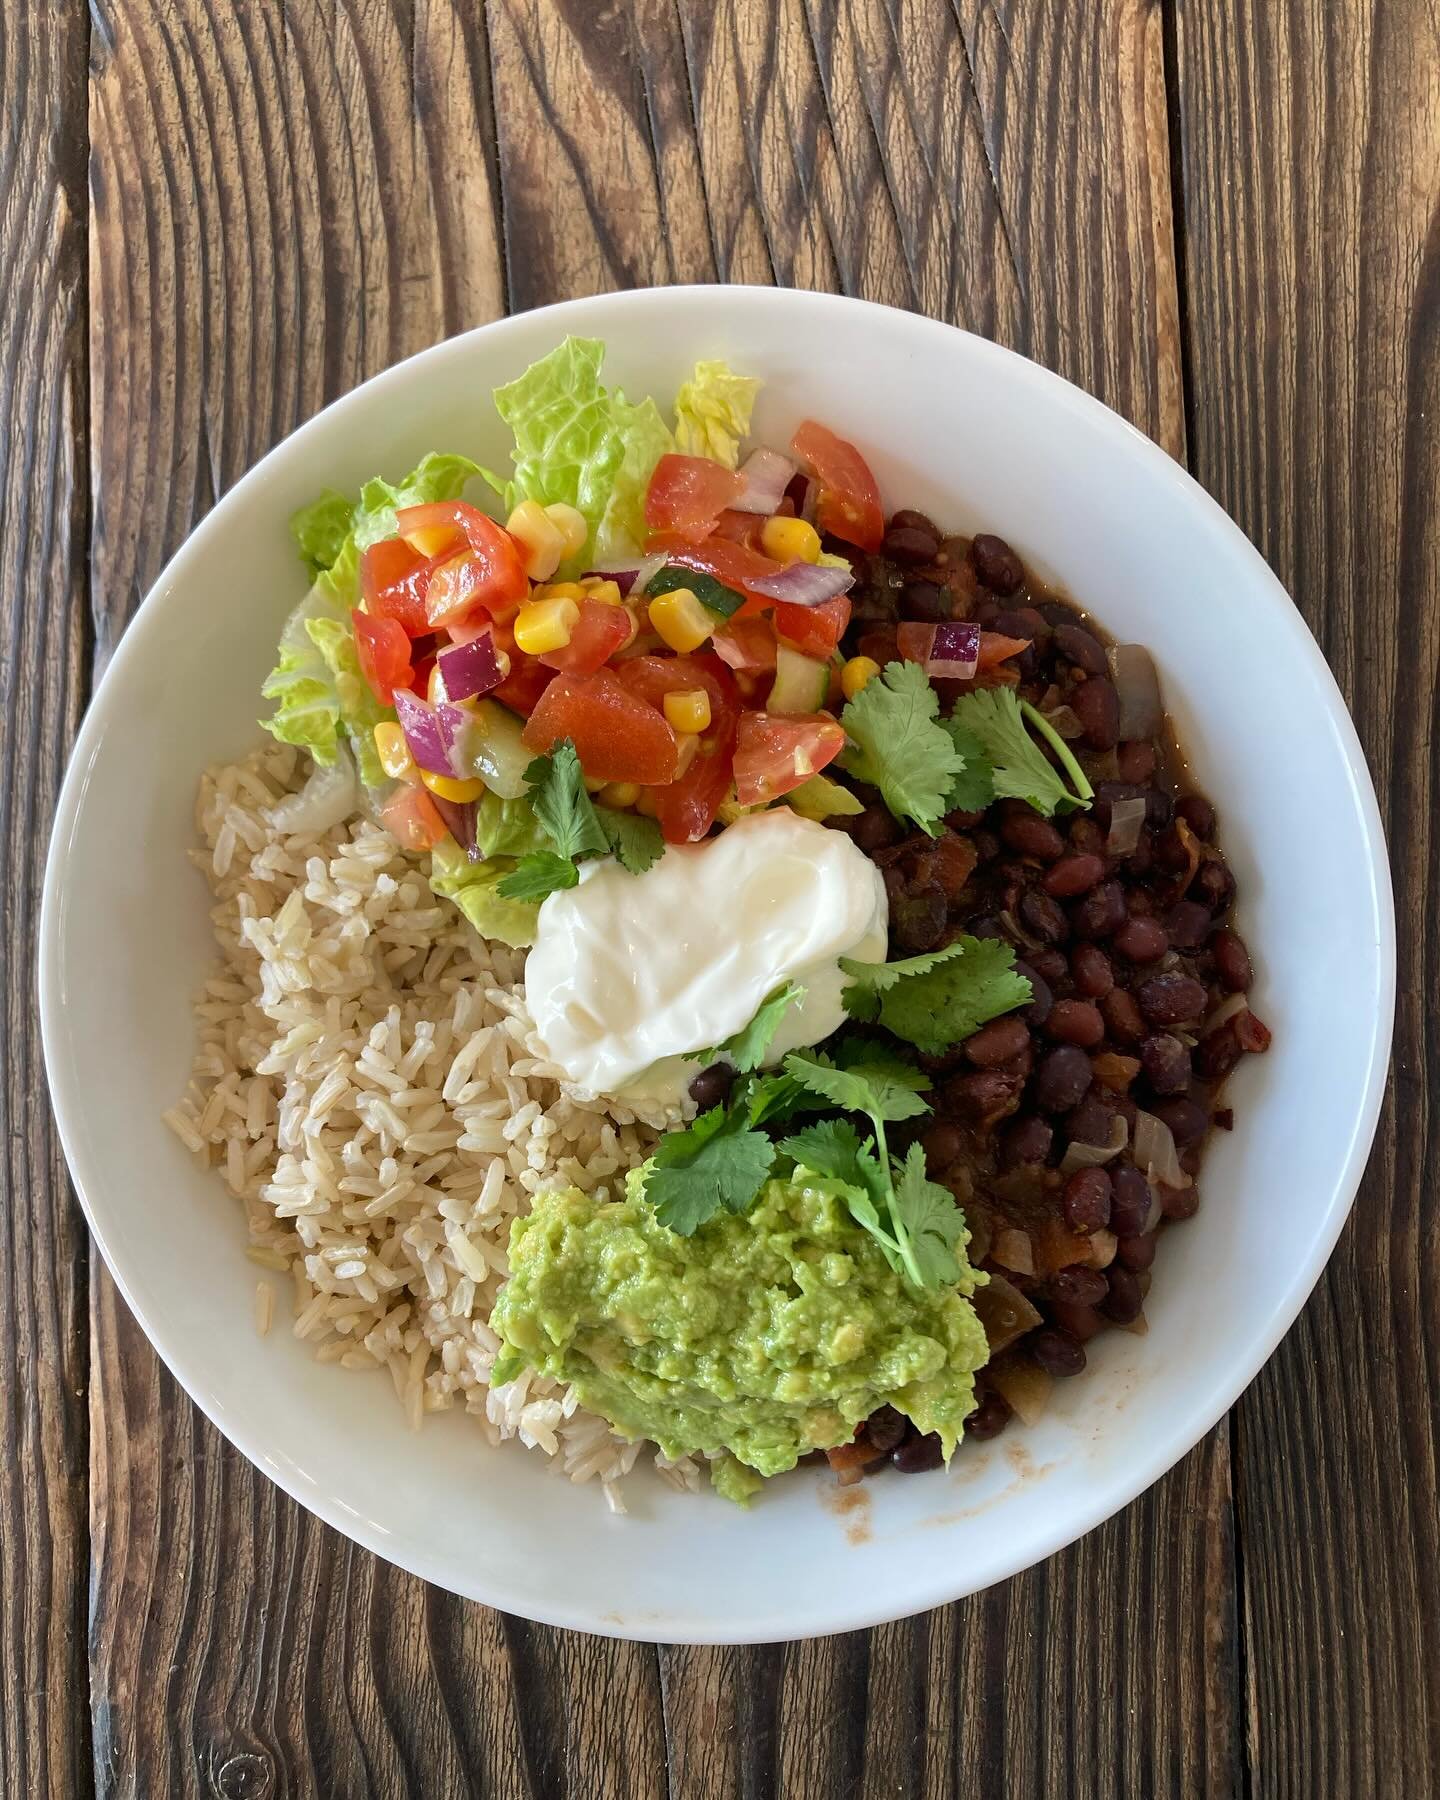 Black bean rice bowl with guacamole &amp; sweet corn salsa 🥑 Midweek energy boost at the Platform. 

#veggie #vegan #lunch #planbased #lcalcafe #homemade #homegrown #kombucha #cakes #coffee #community #loughboroughjunction